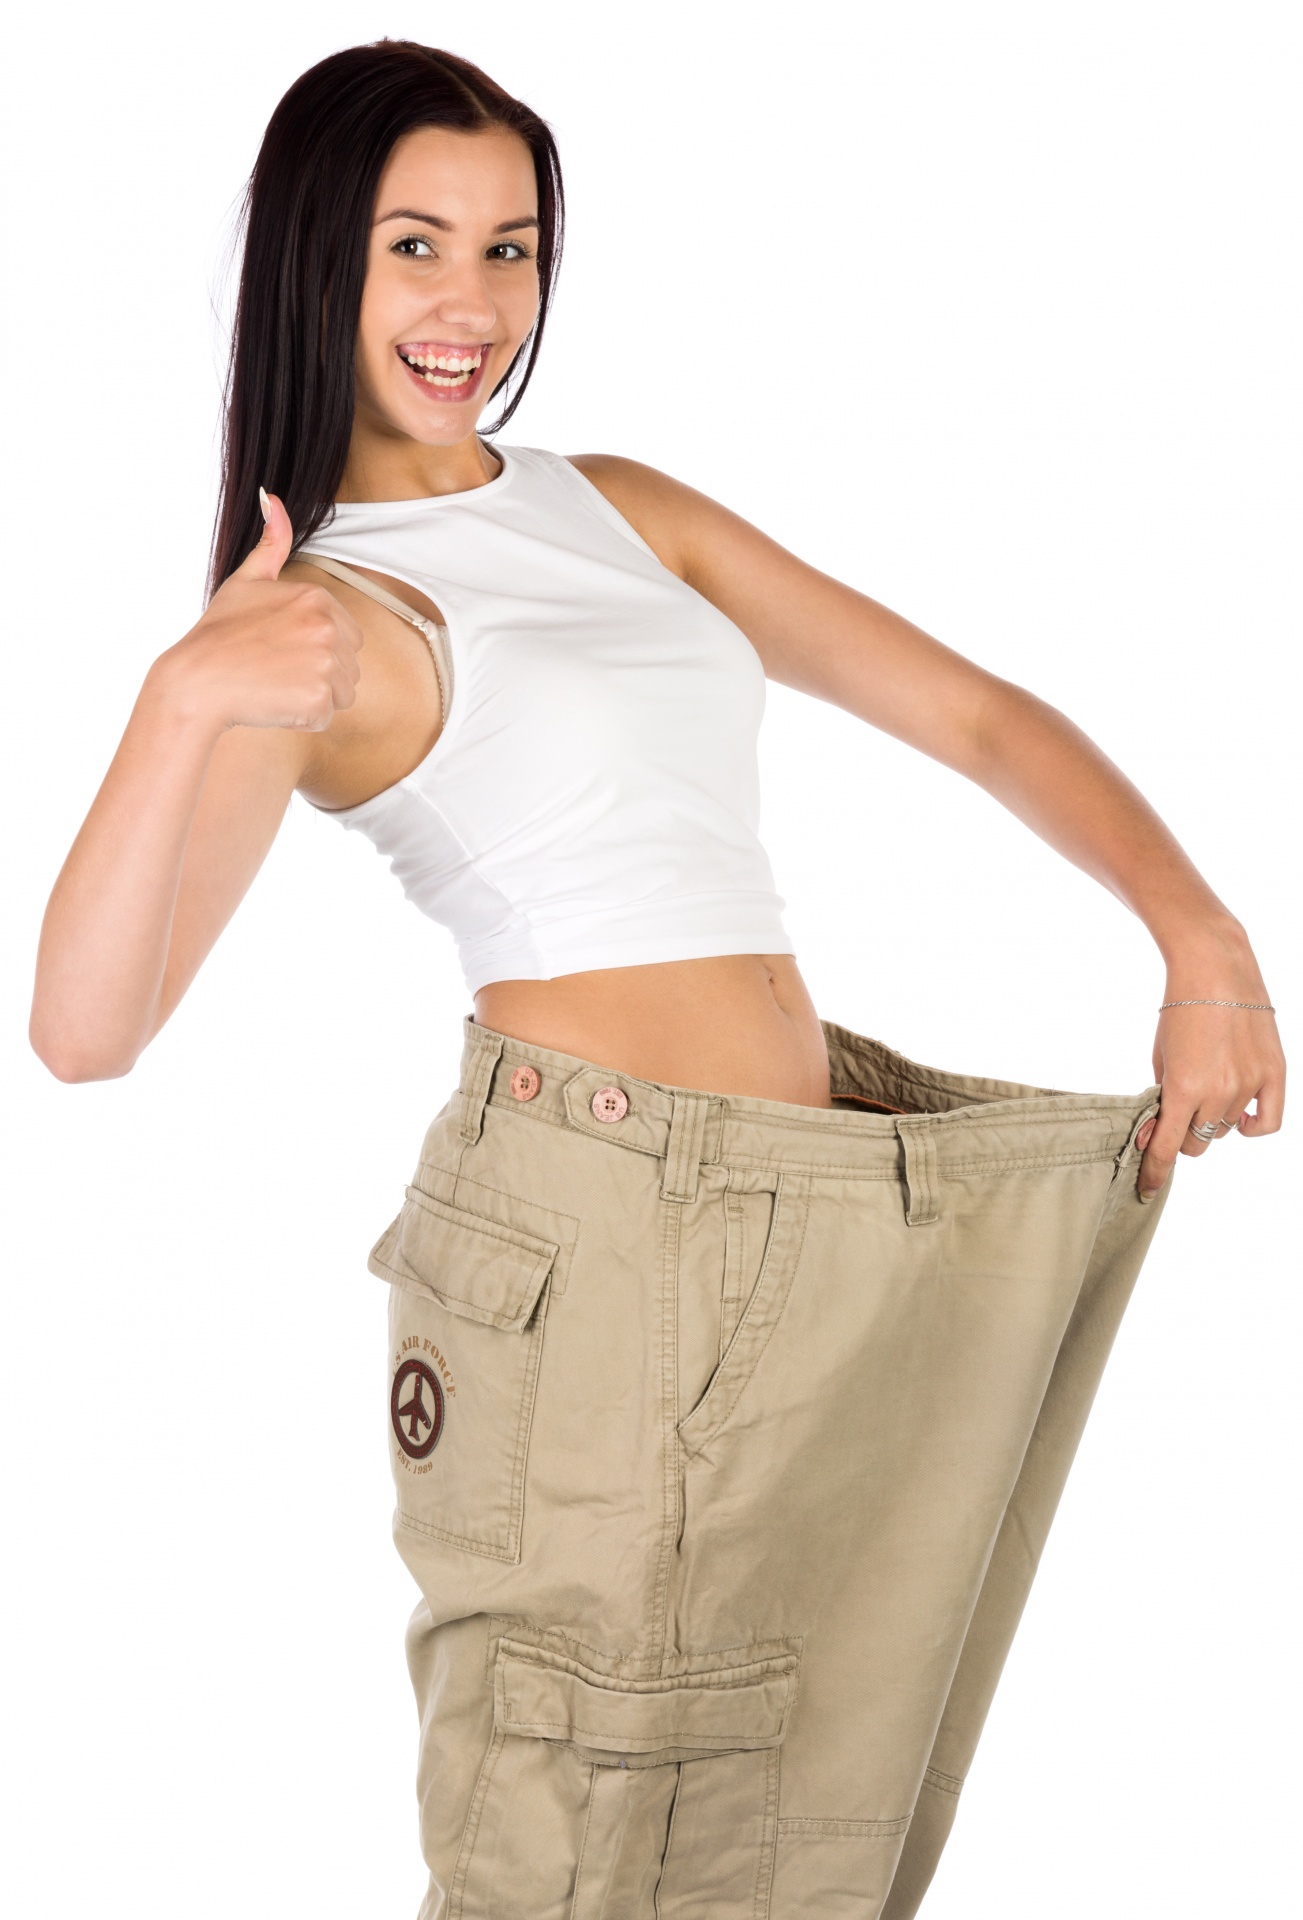 Femeie în pantaloni după dieta